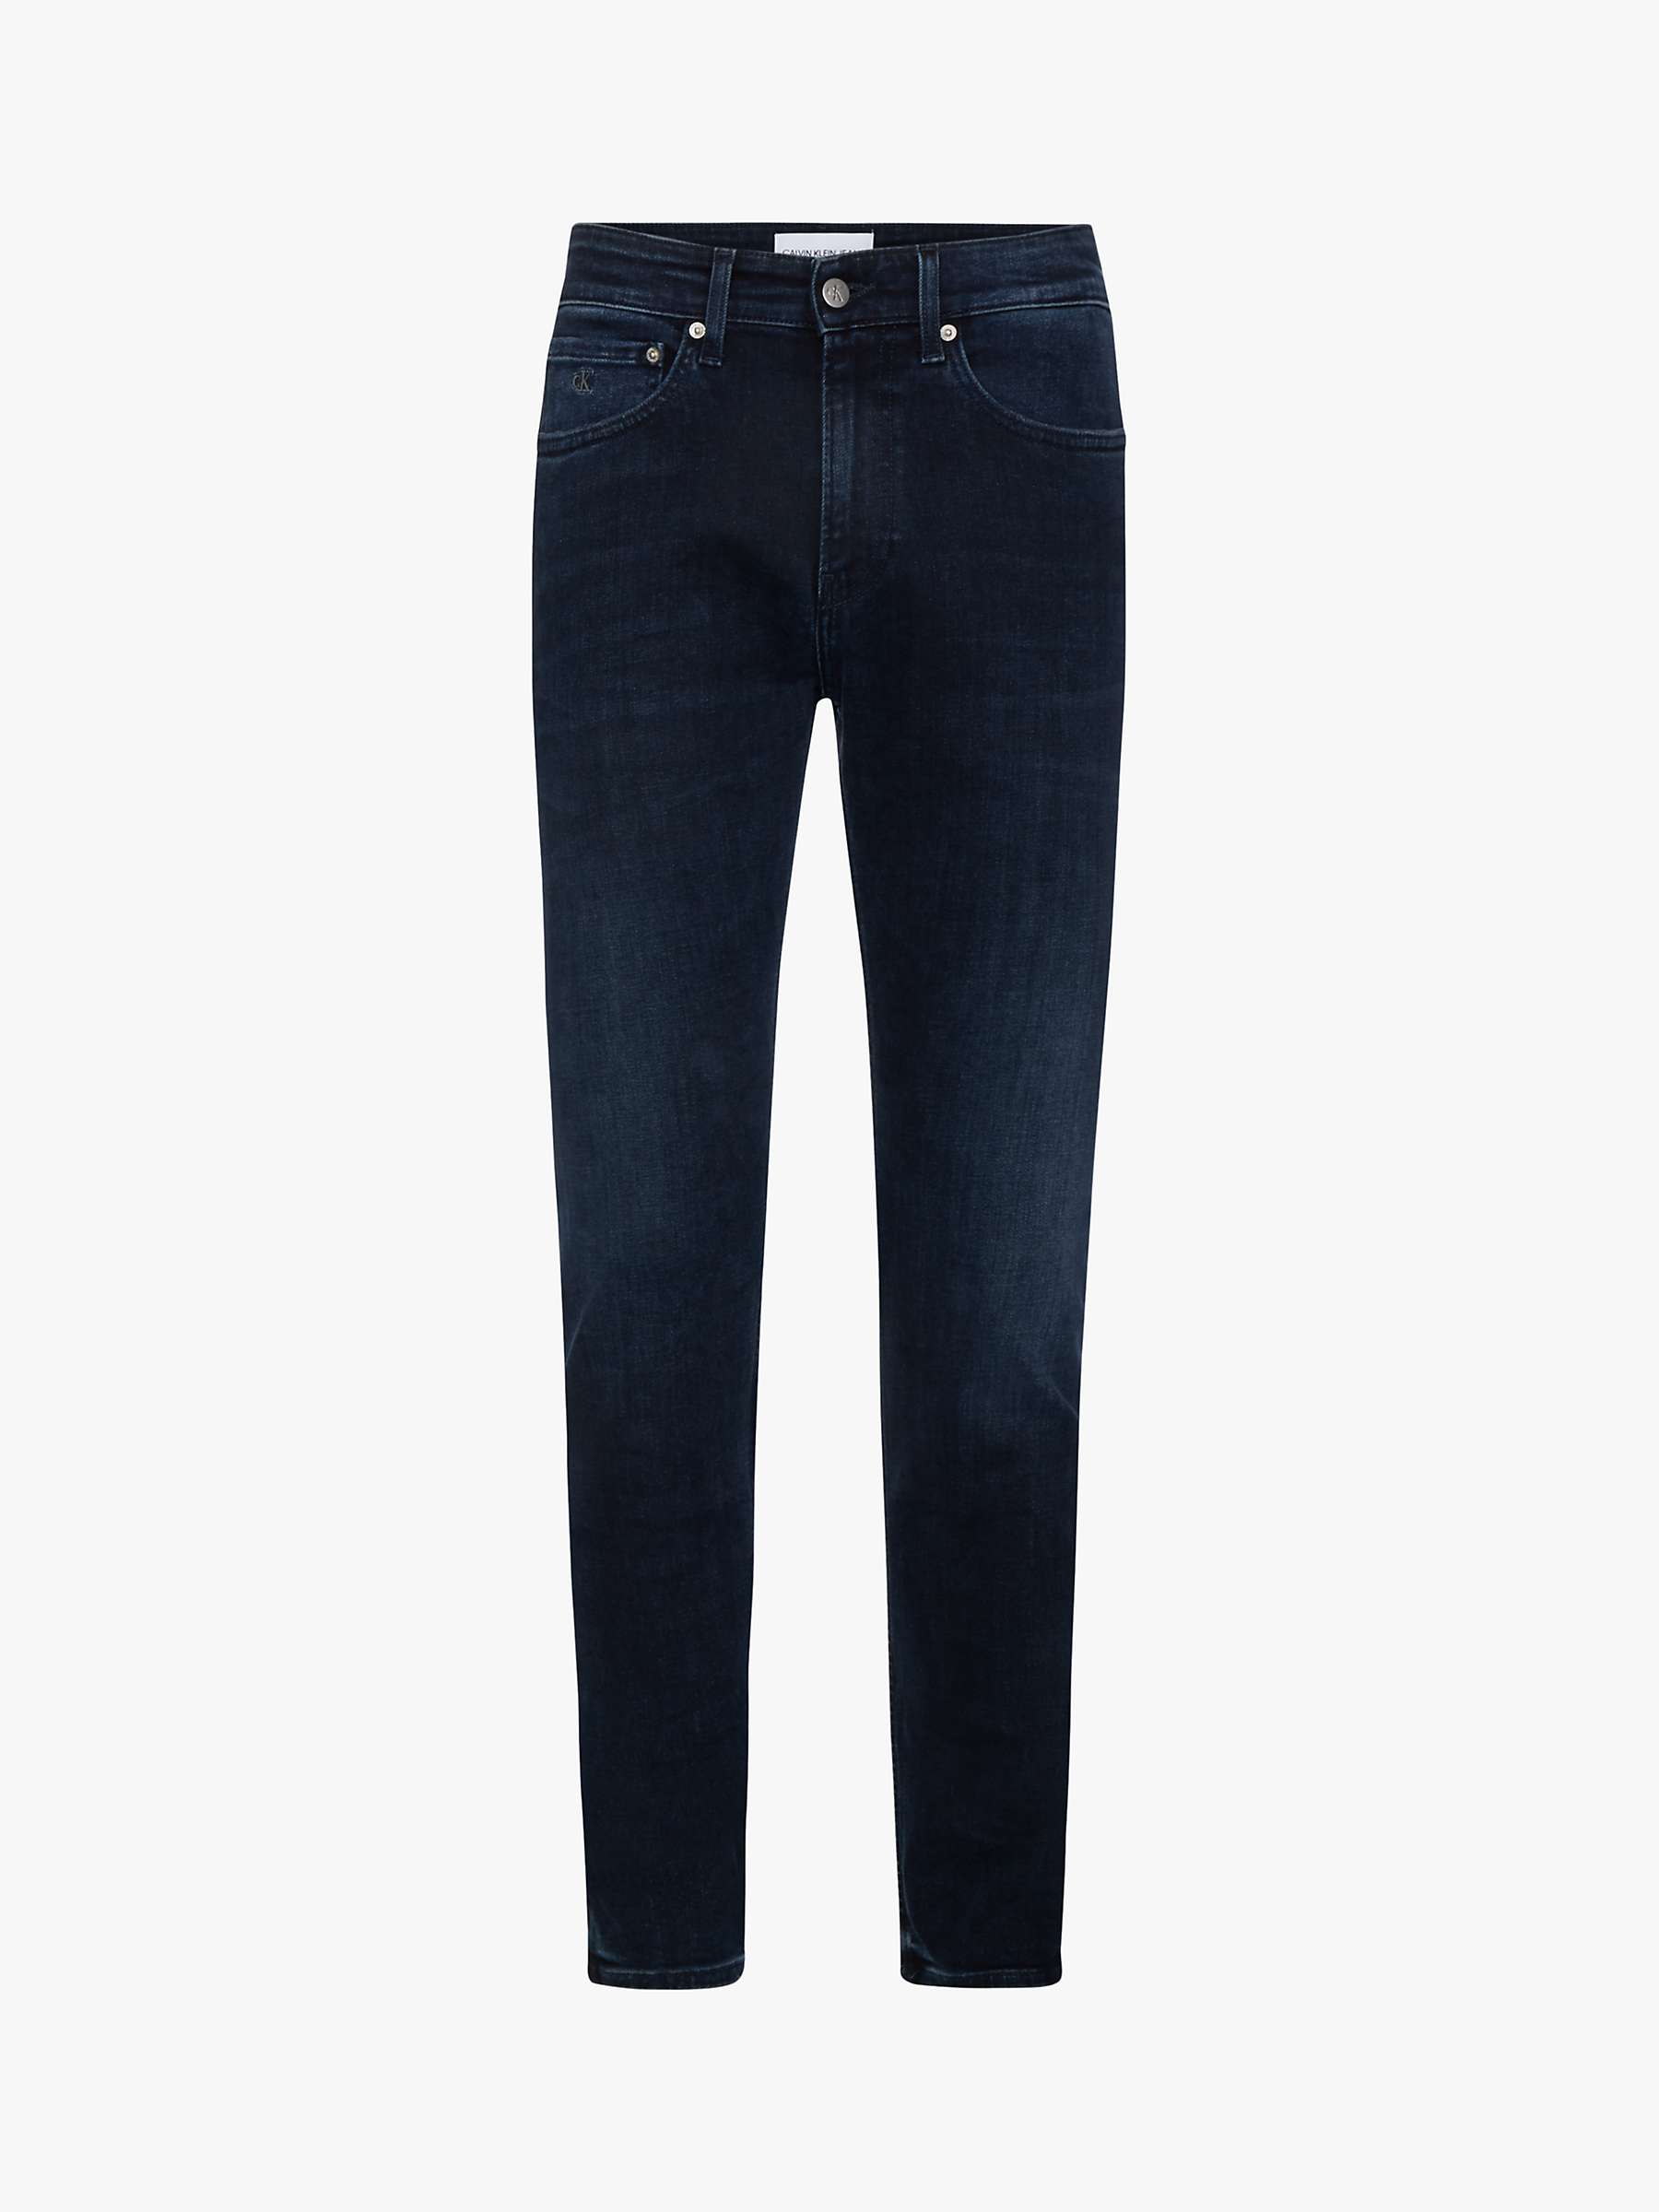 Calvin Klein Jeans 016 Skinny Jeans, Blue/Black at John Lewis & Partners